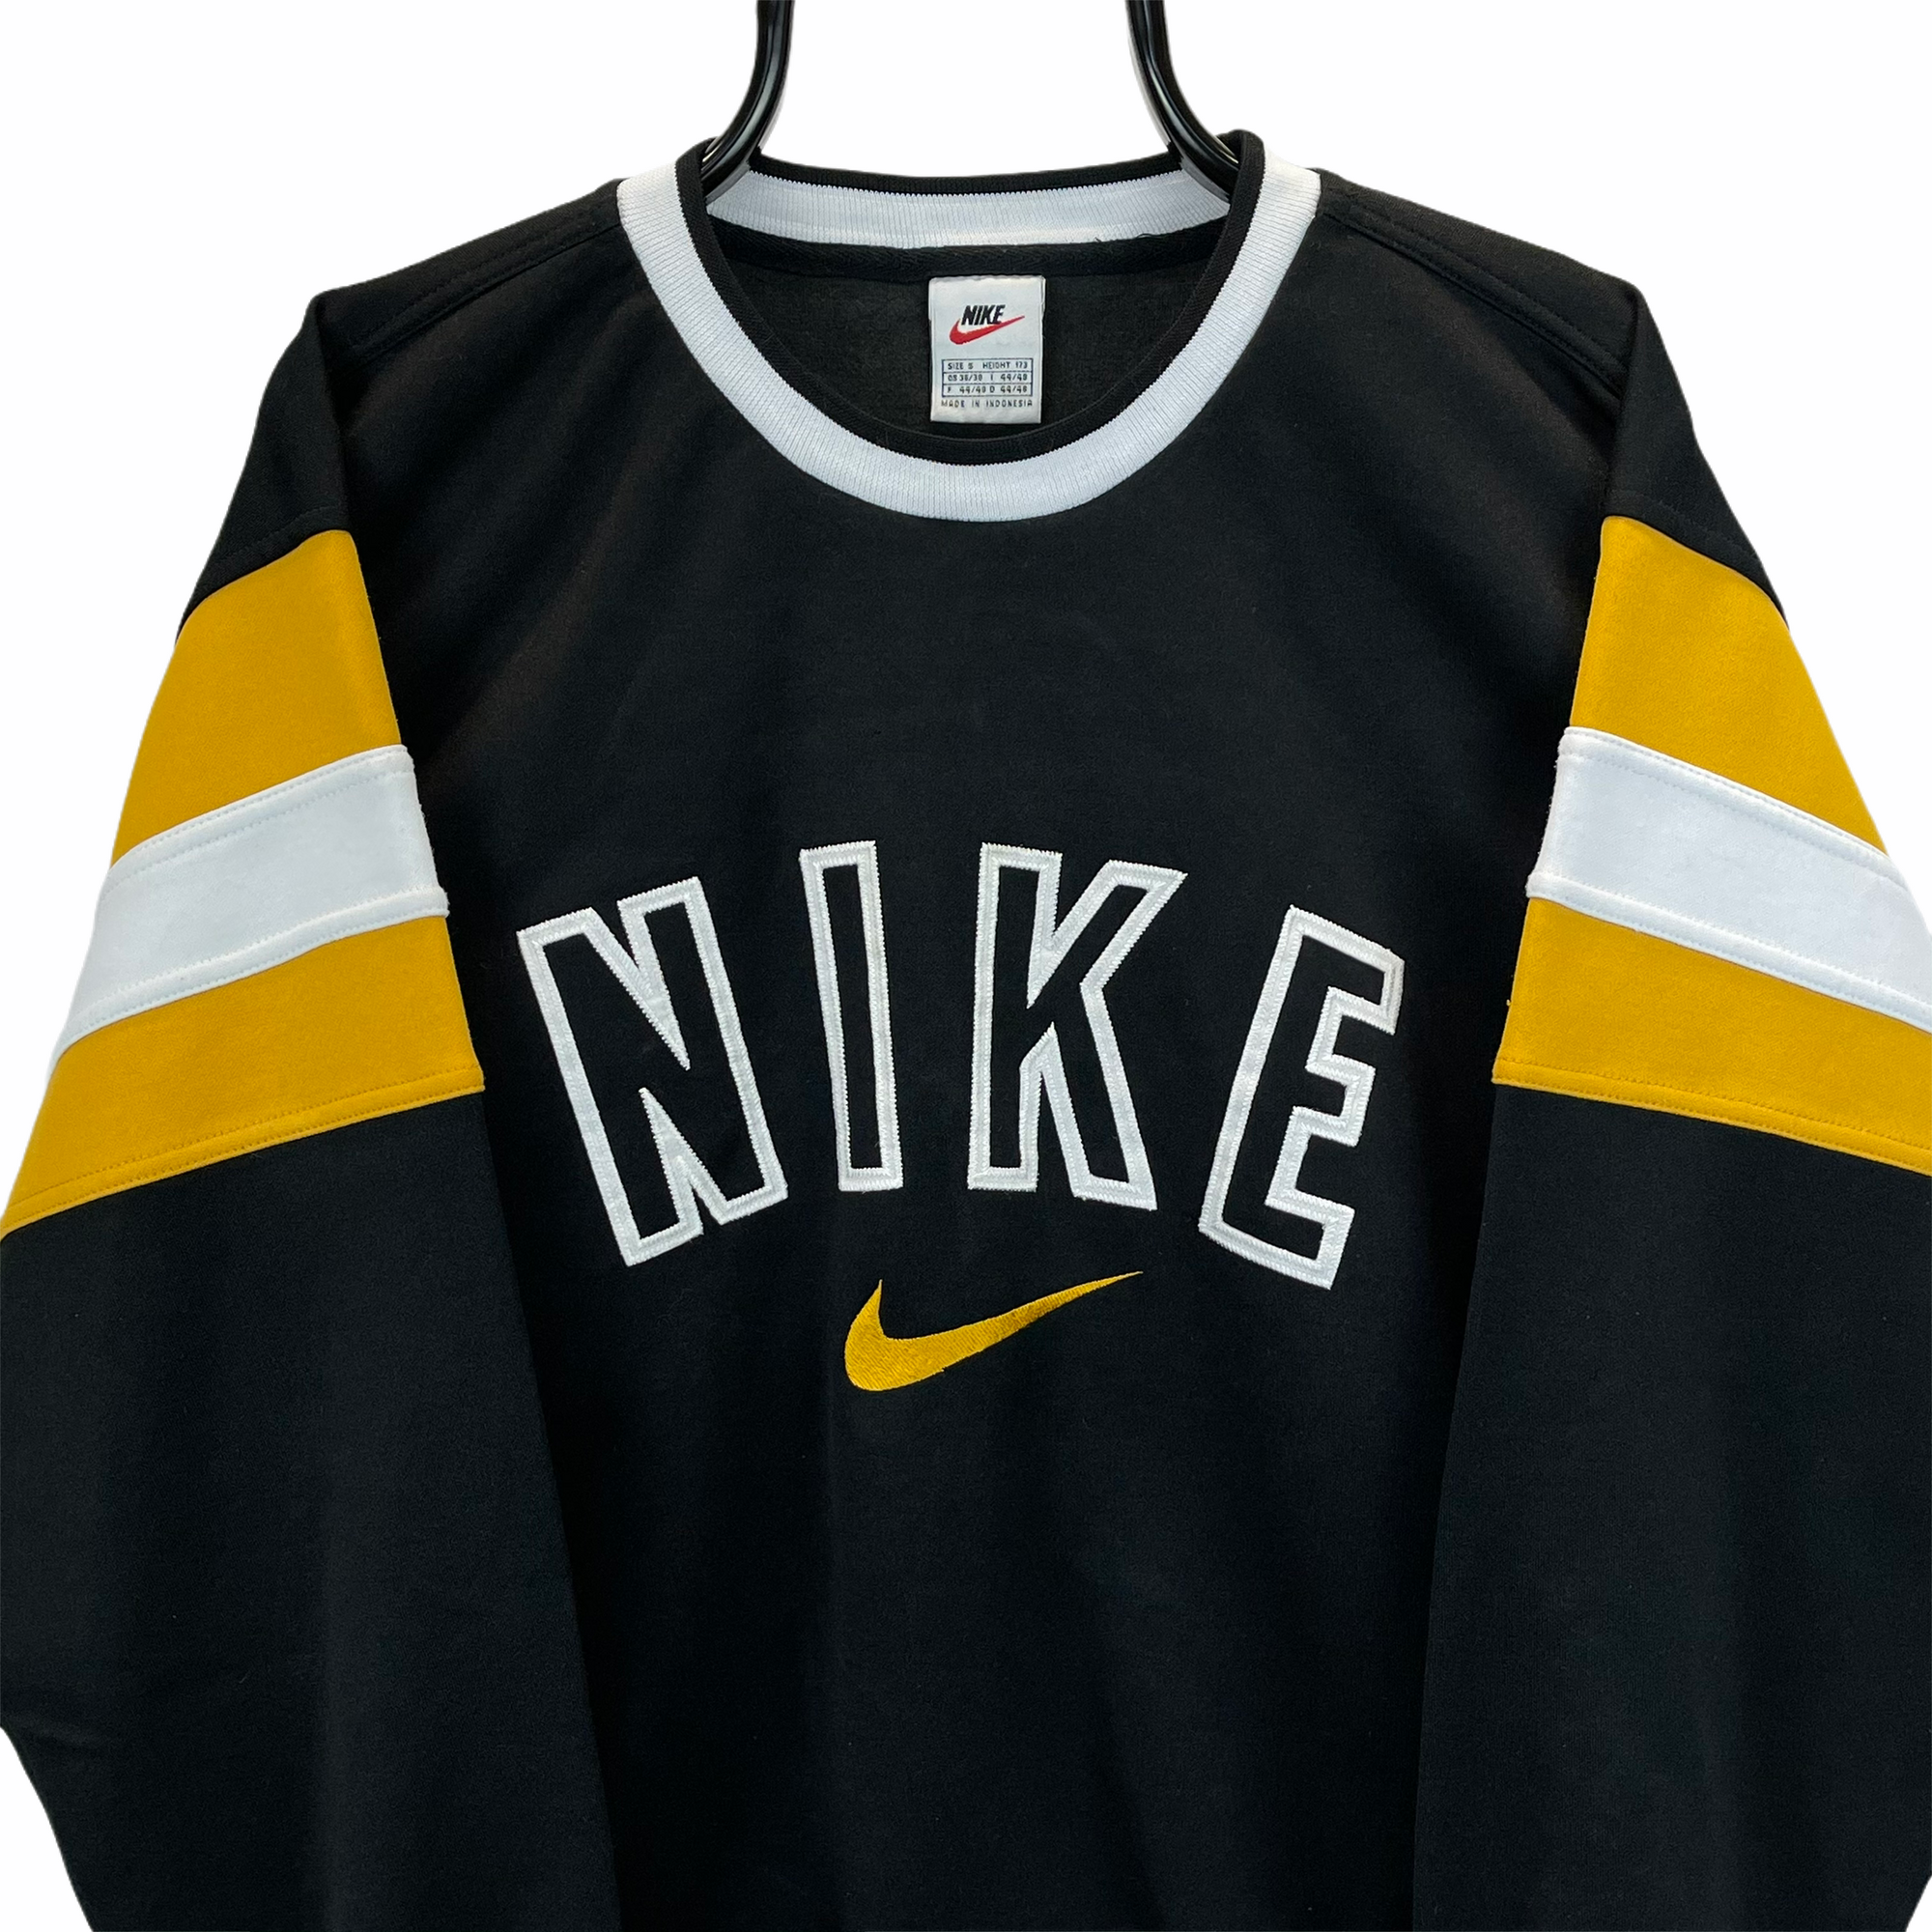 Vintage 90s Nike Spellout Sweatshirt in Black, Yellow & White - Men's Small/Women's Medium